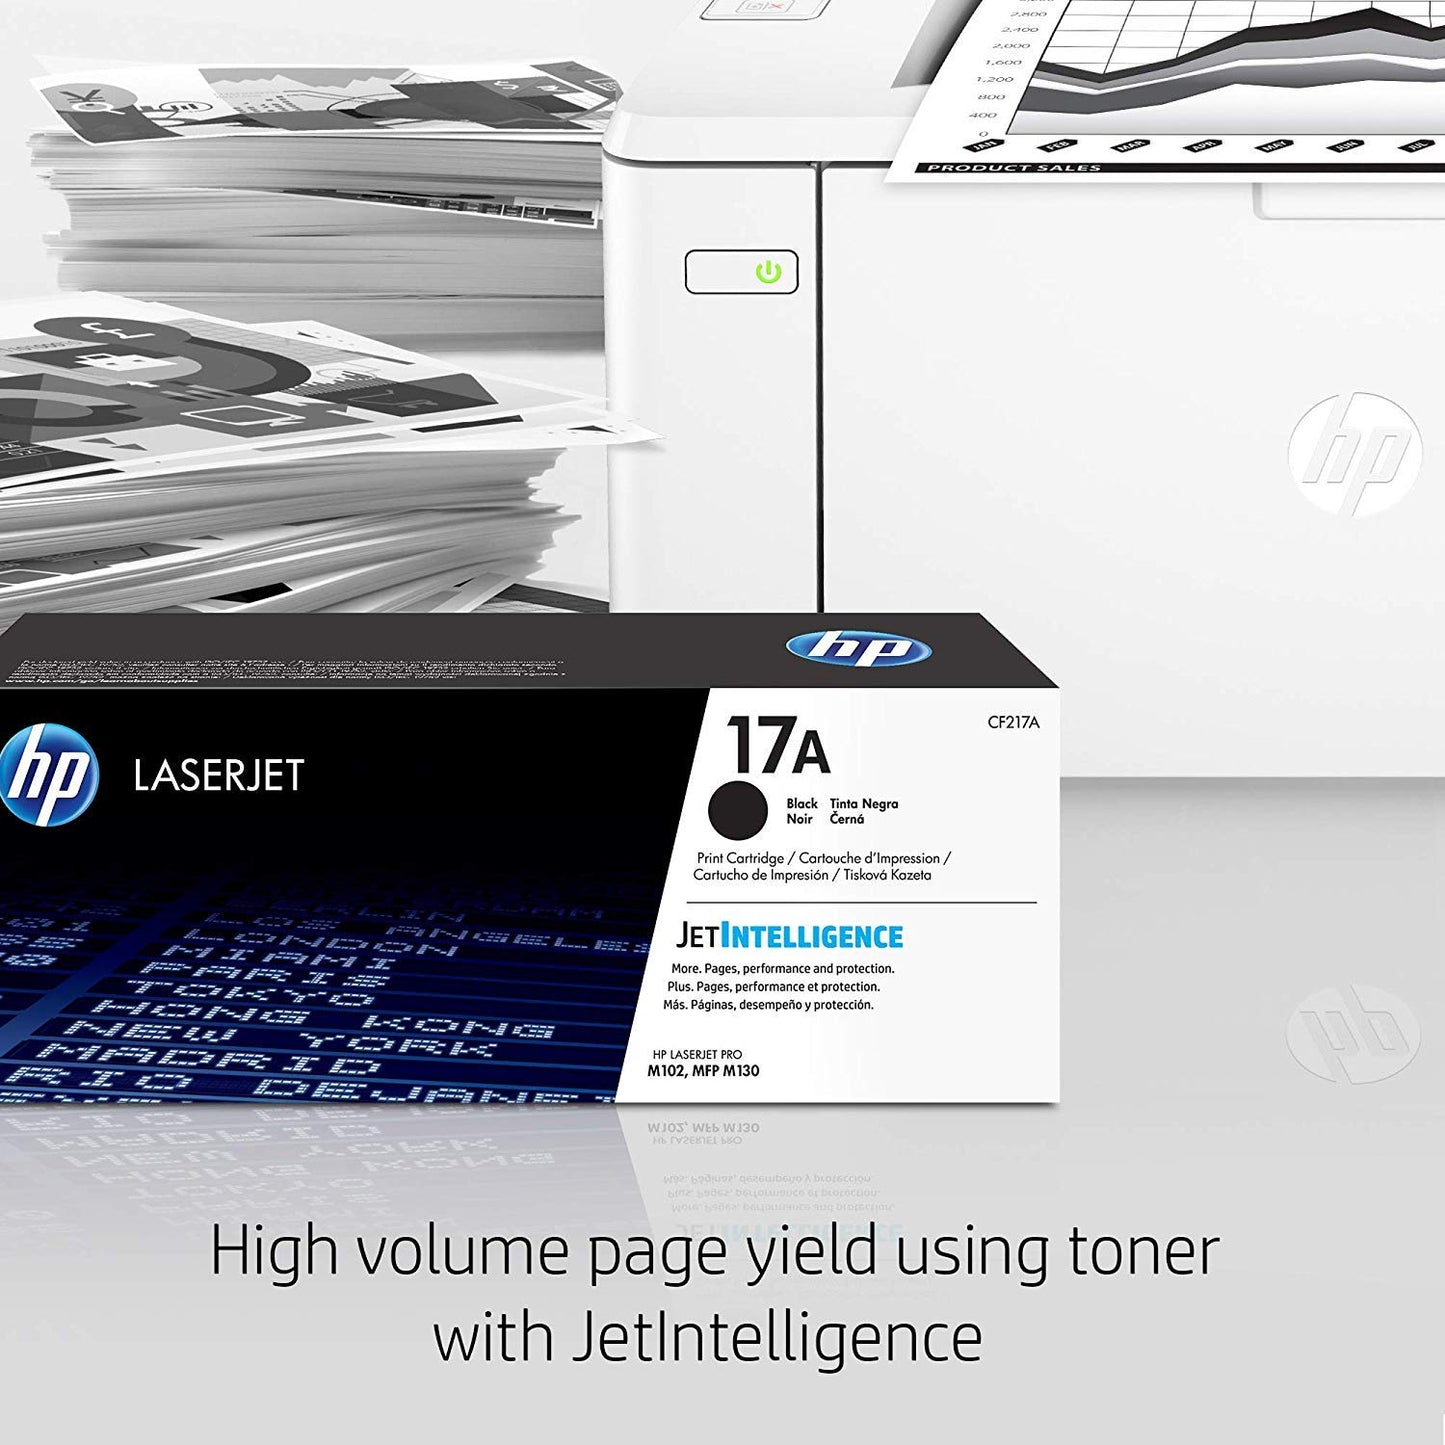 HP LaserJet Pro M102w Wireless Laser Printer, Works with Alexa (G3Q35A). Replaces HP P1102 Laser Printer, White